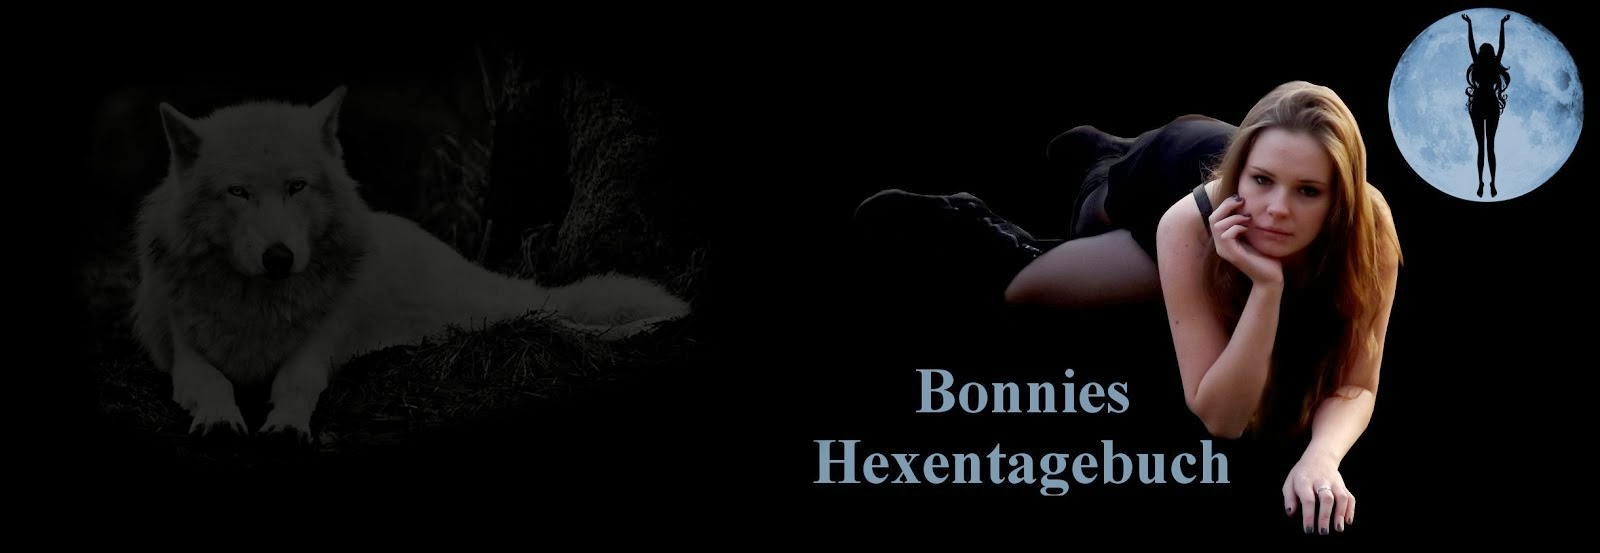 Bonnies Hexentagebuch